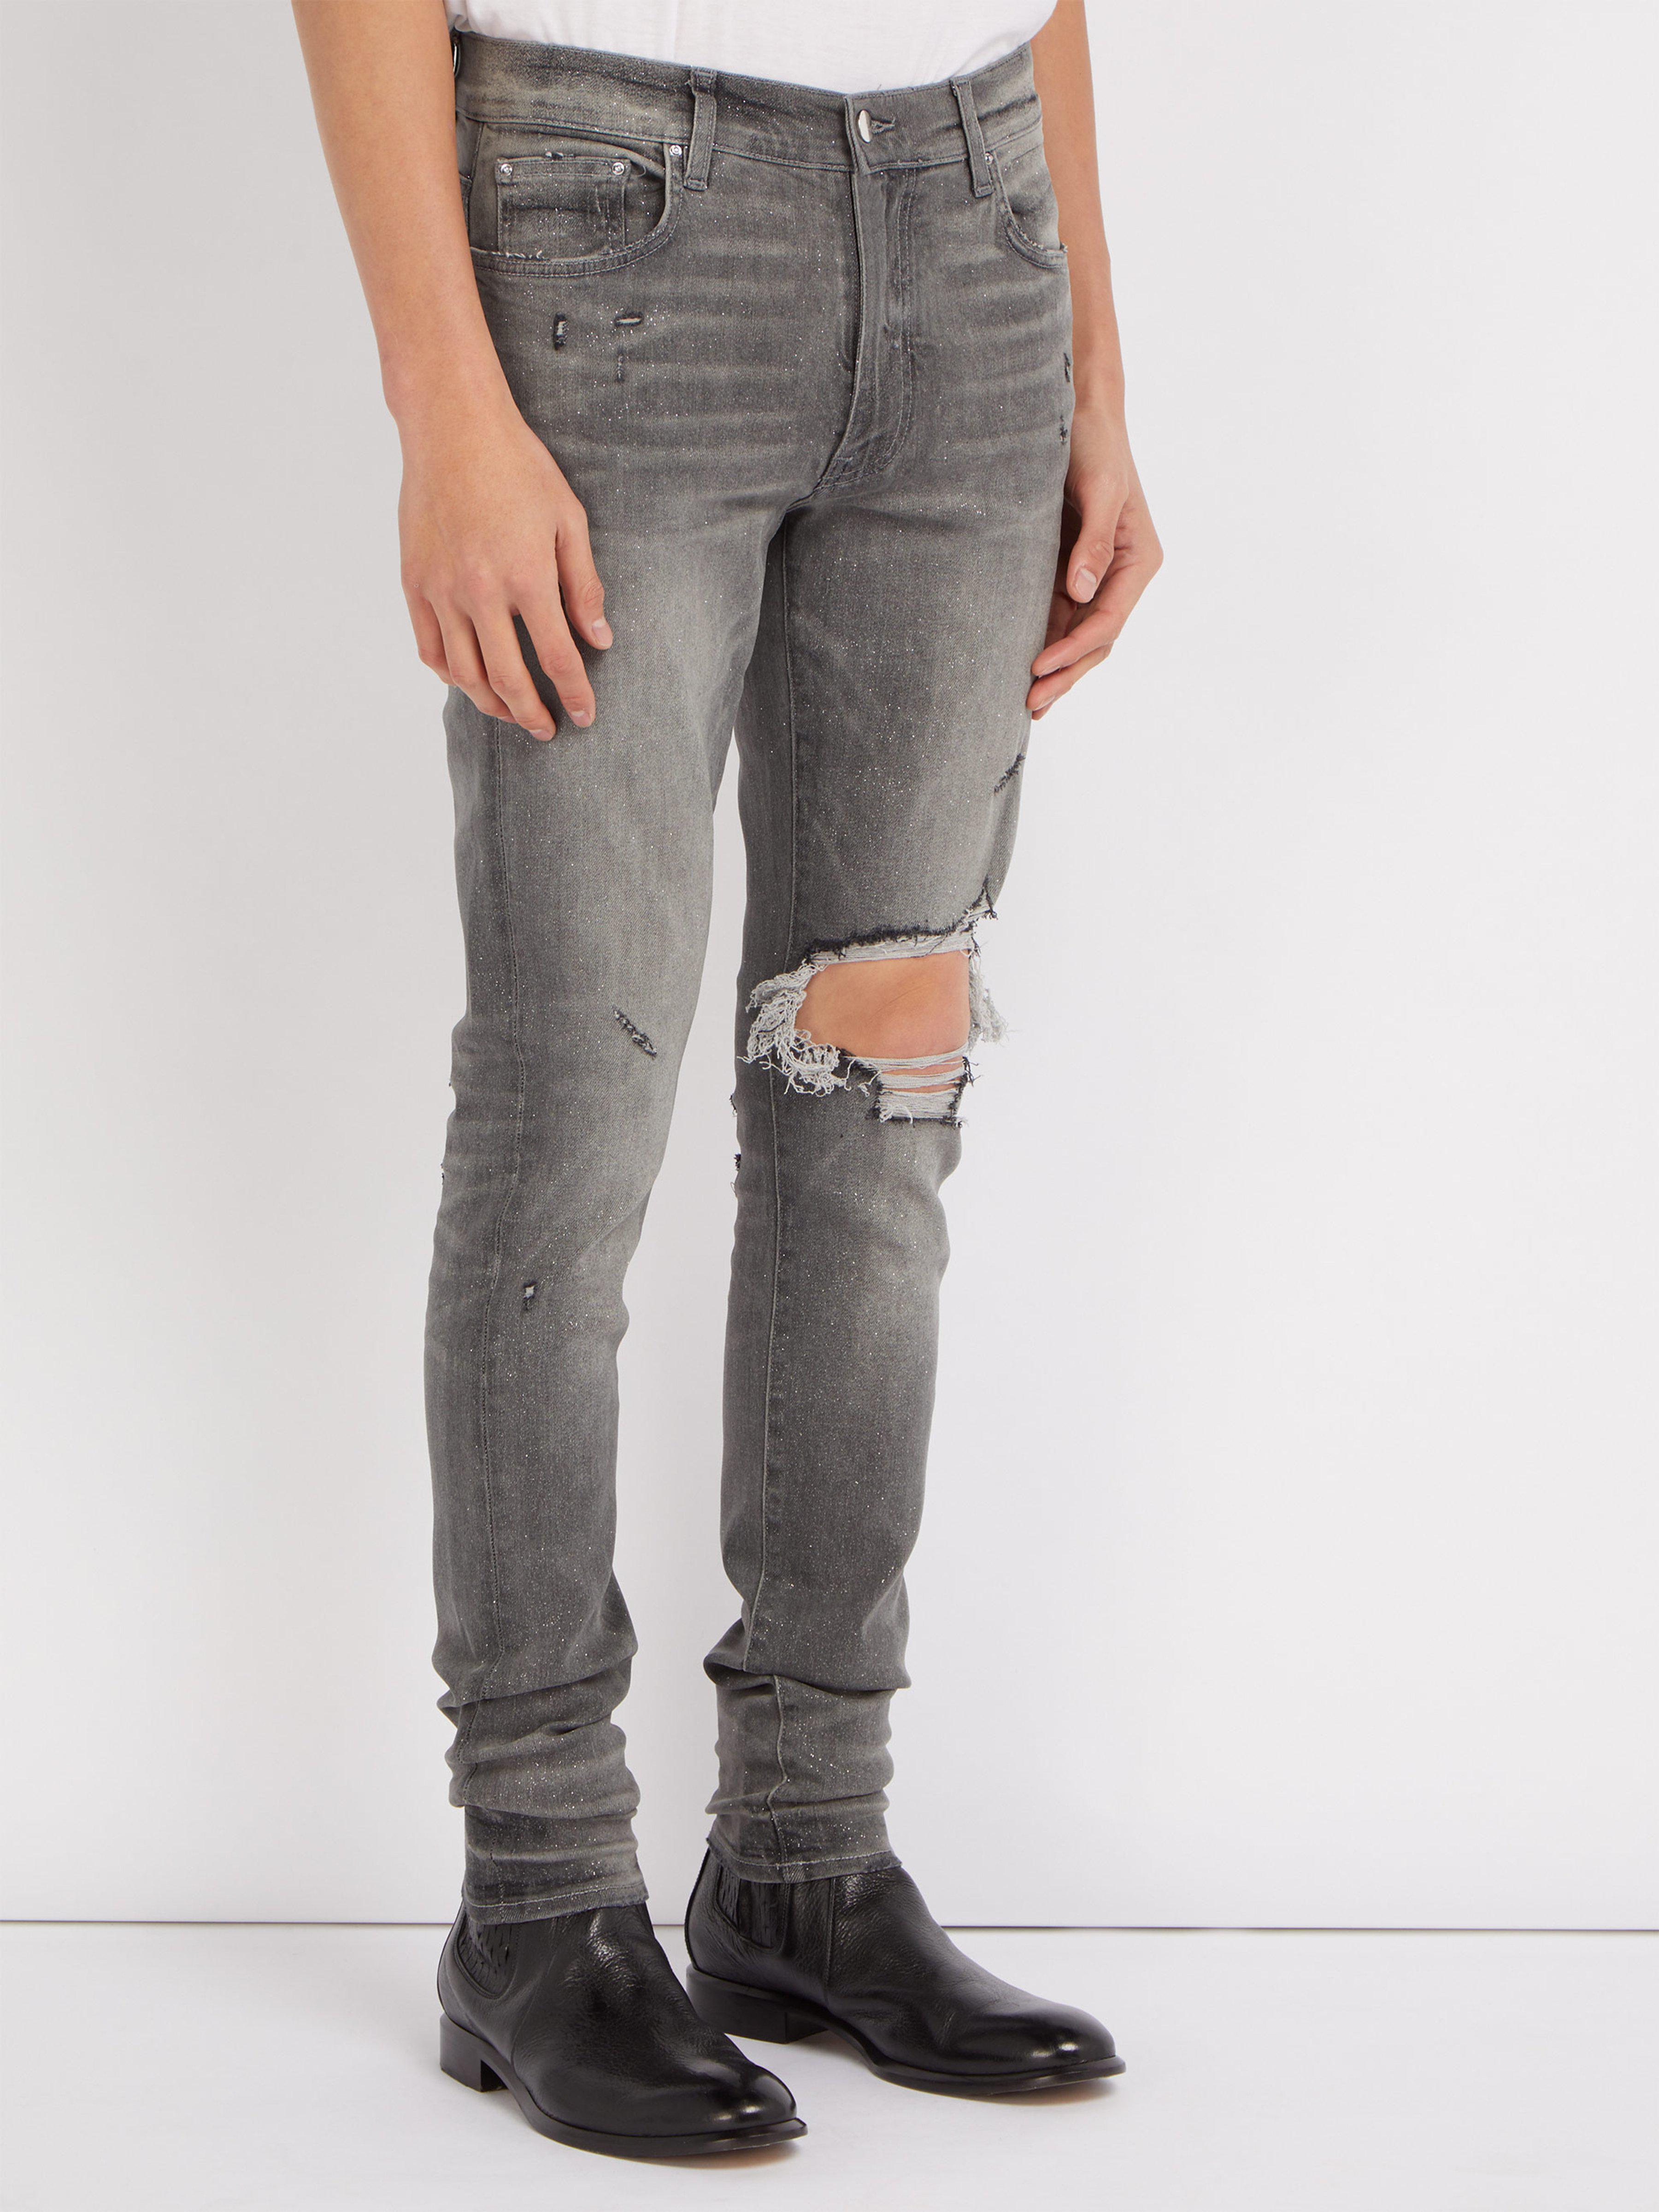 Amiri Denim Glitter Skinny Fit Jeans in Grey (Grey) for Men - Lyst